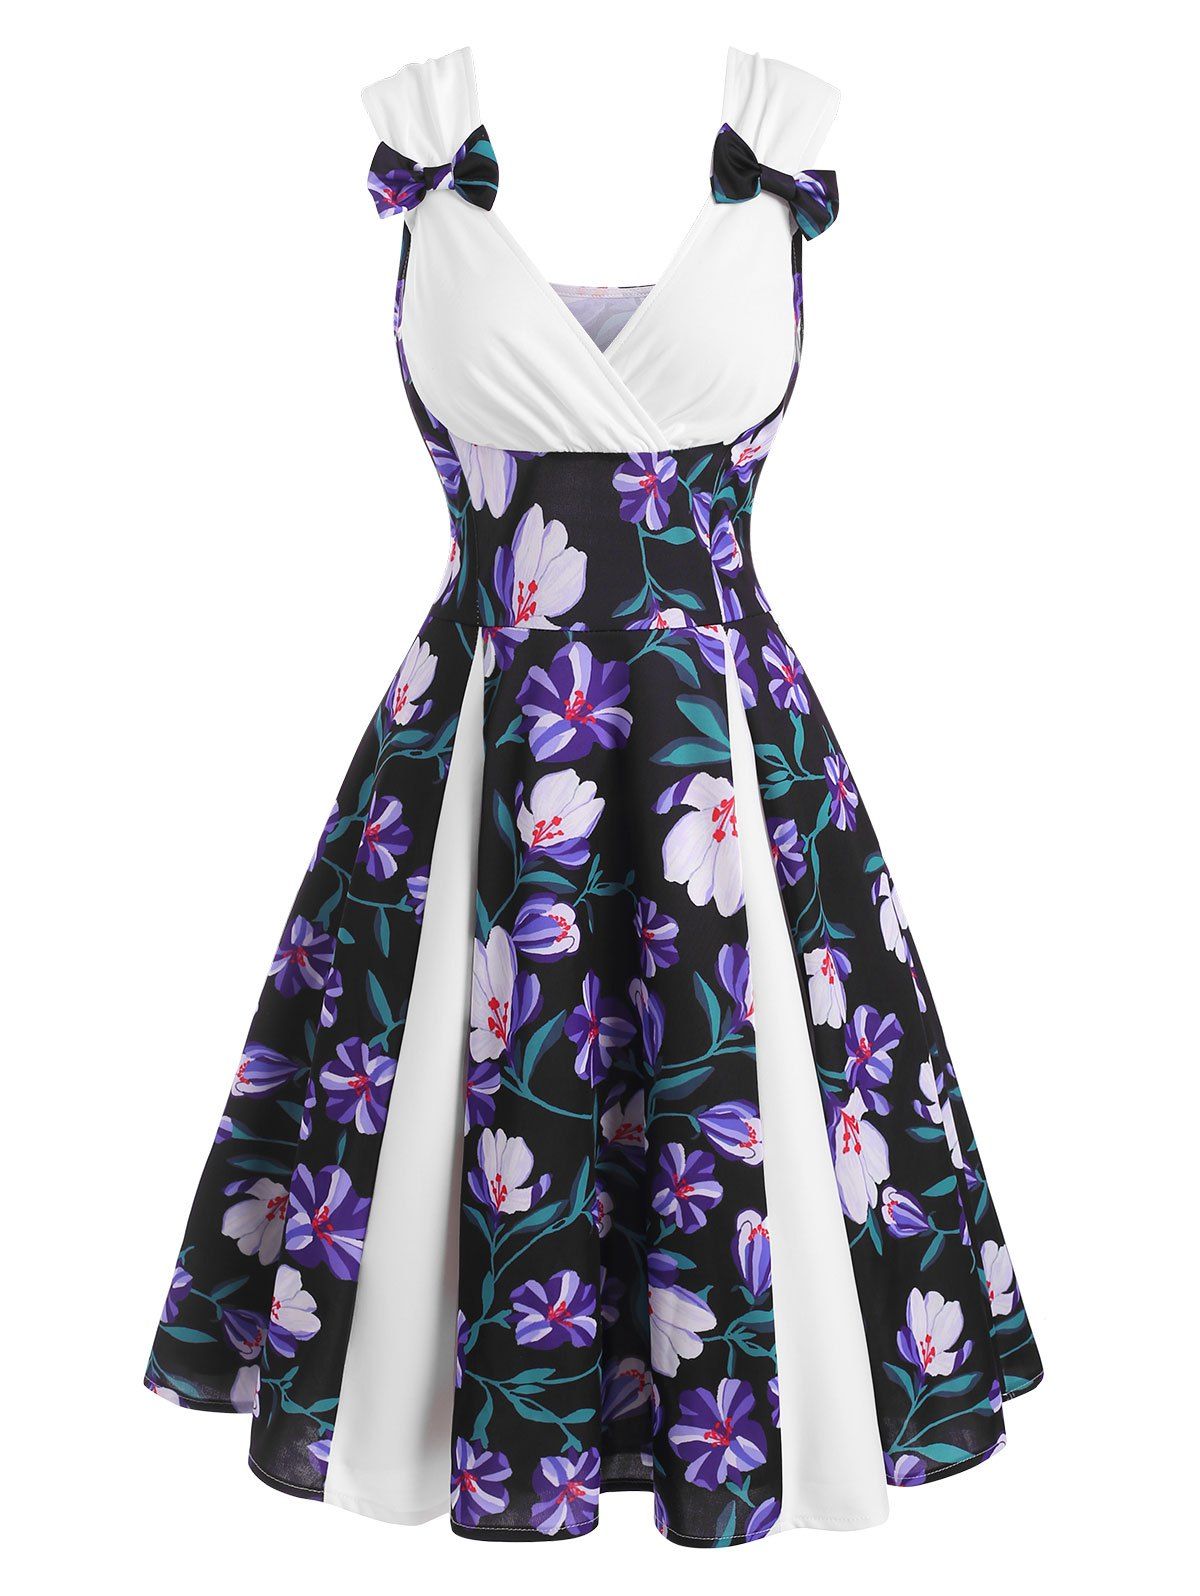 Floral Print Bowknot Godet Dress - multicolor S